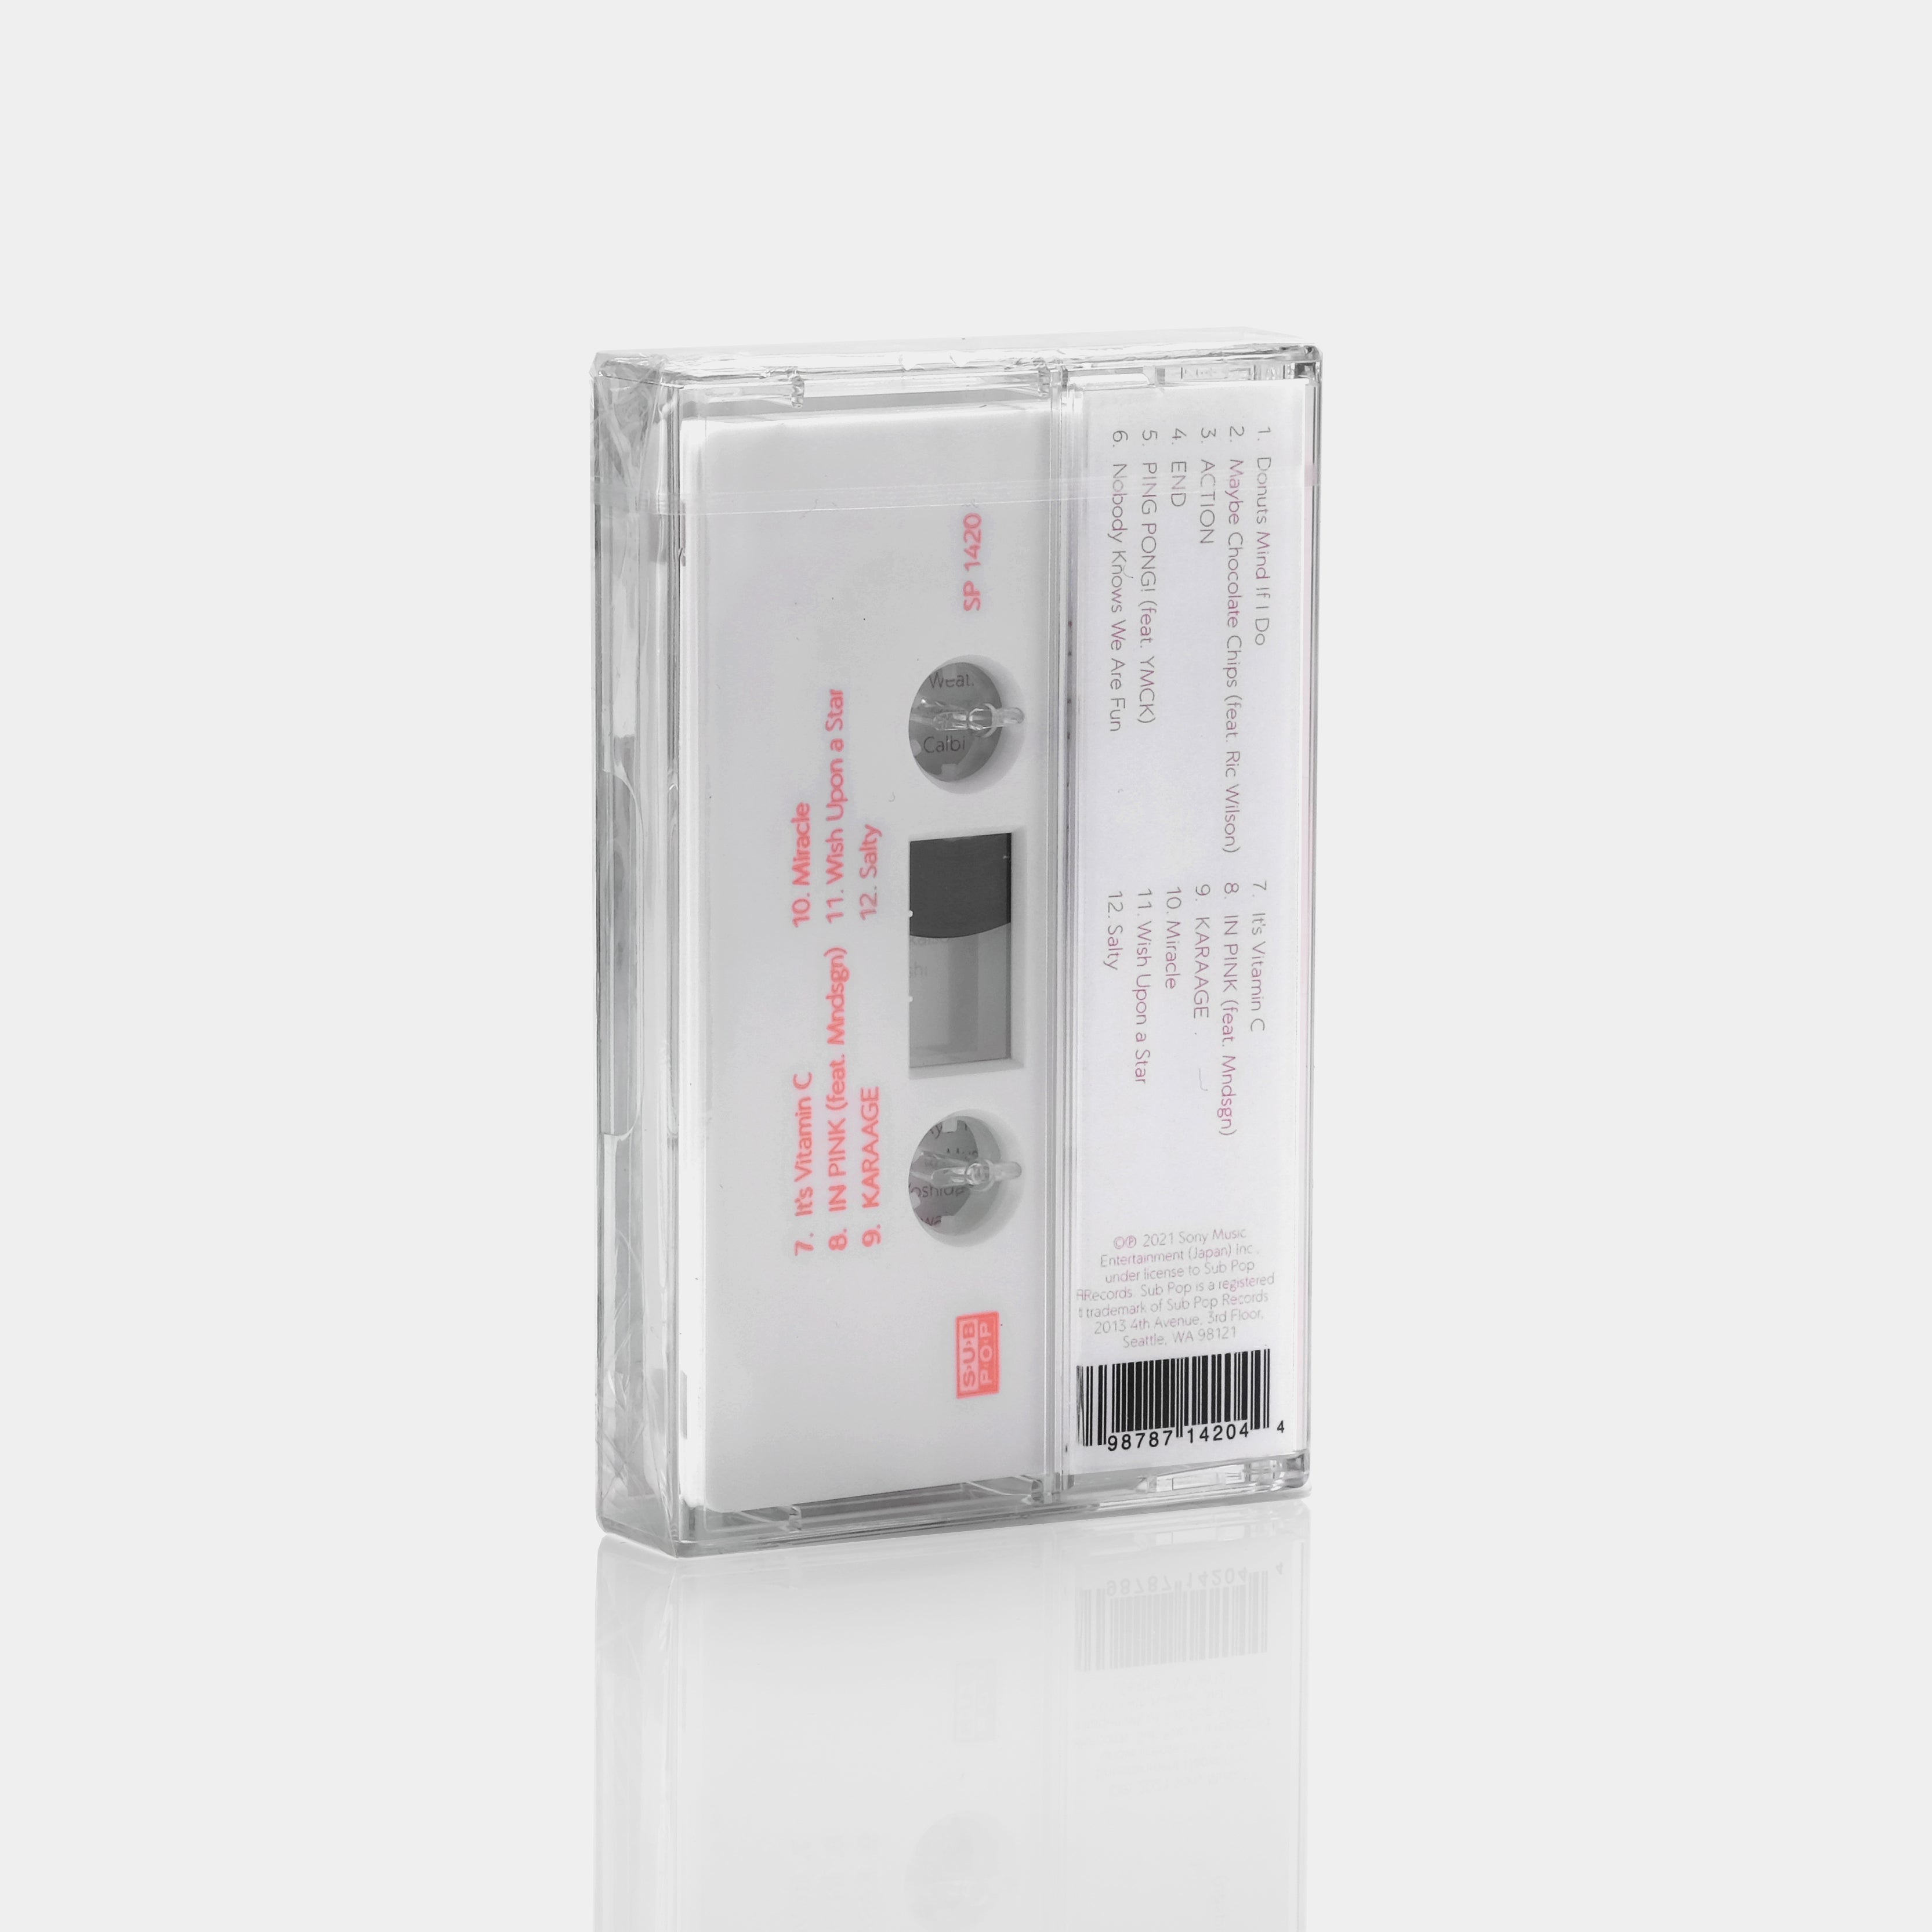 CHAI - WINK Cassette Tape